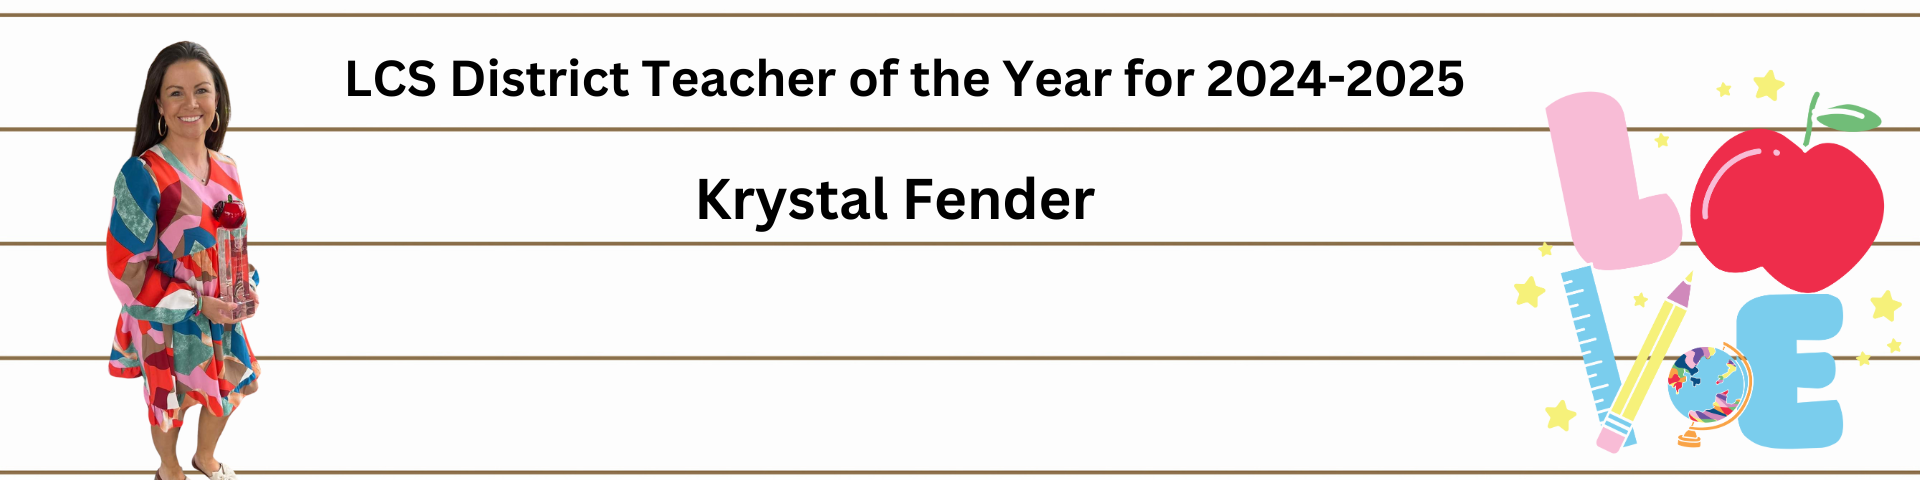 24-25 District Teacher of the Year Krystal Fender